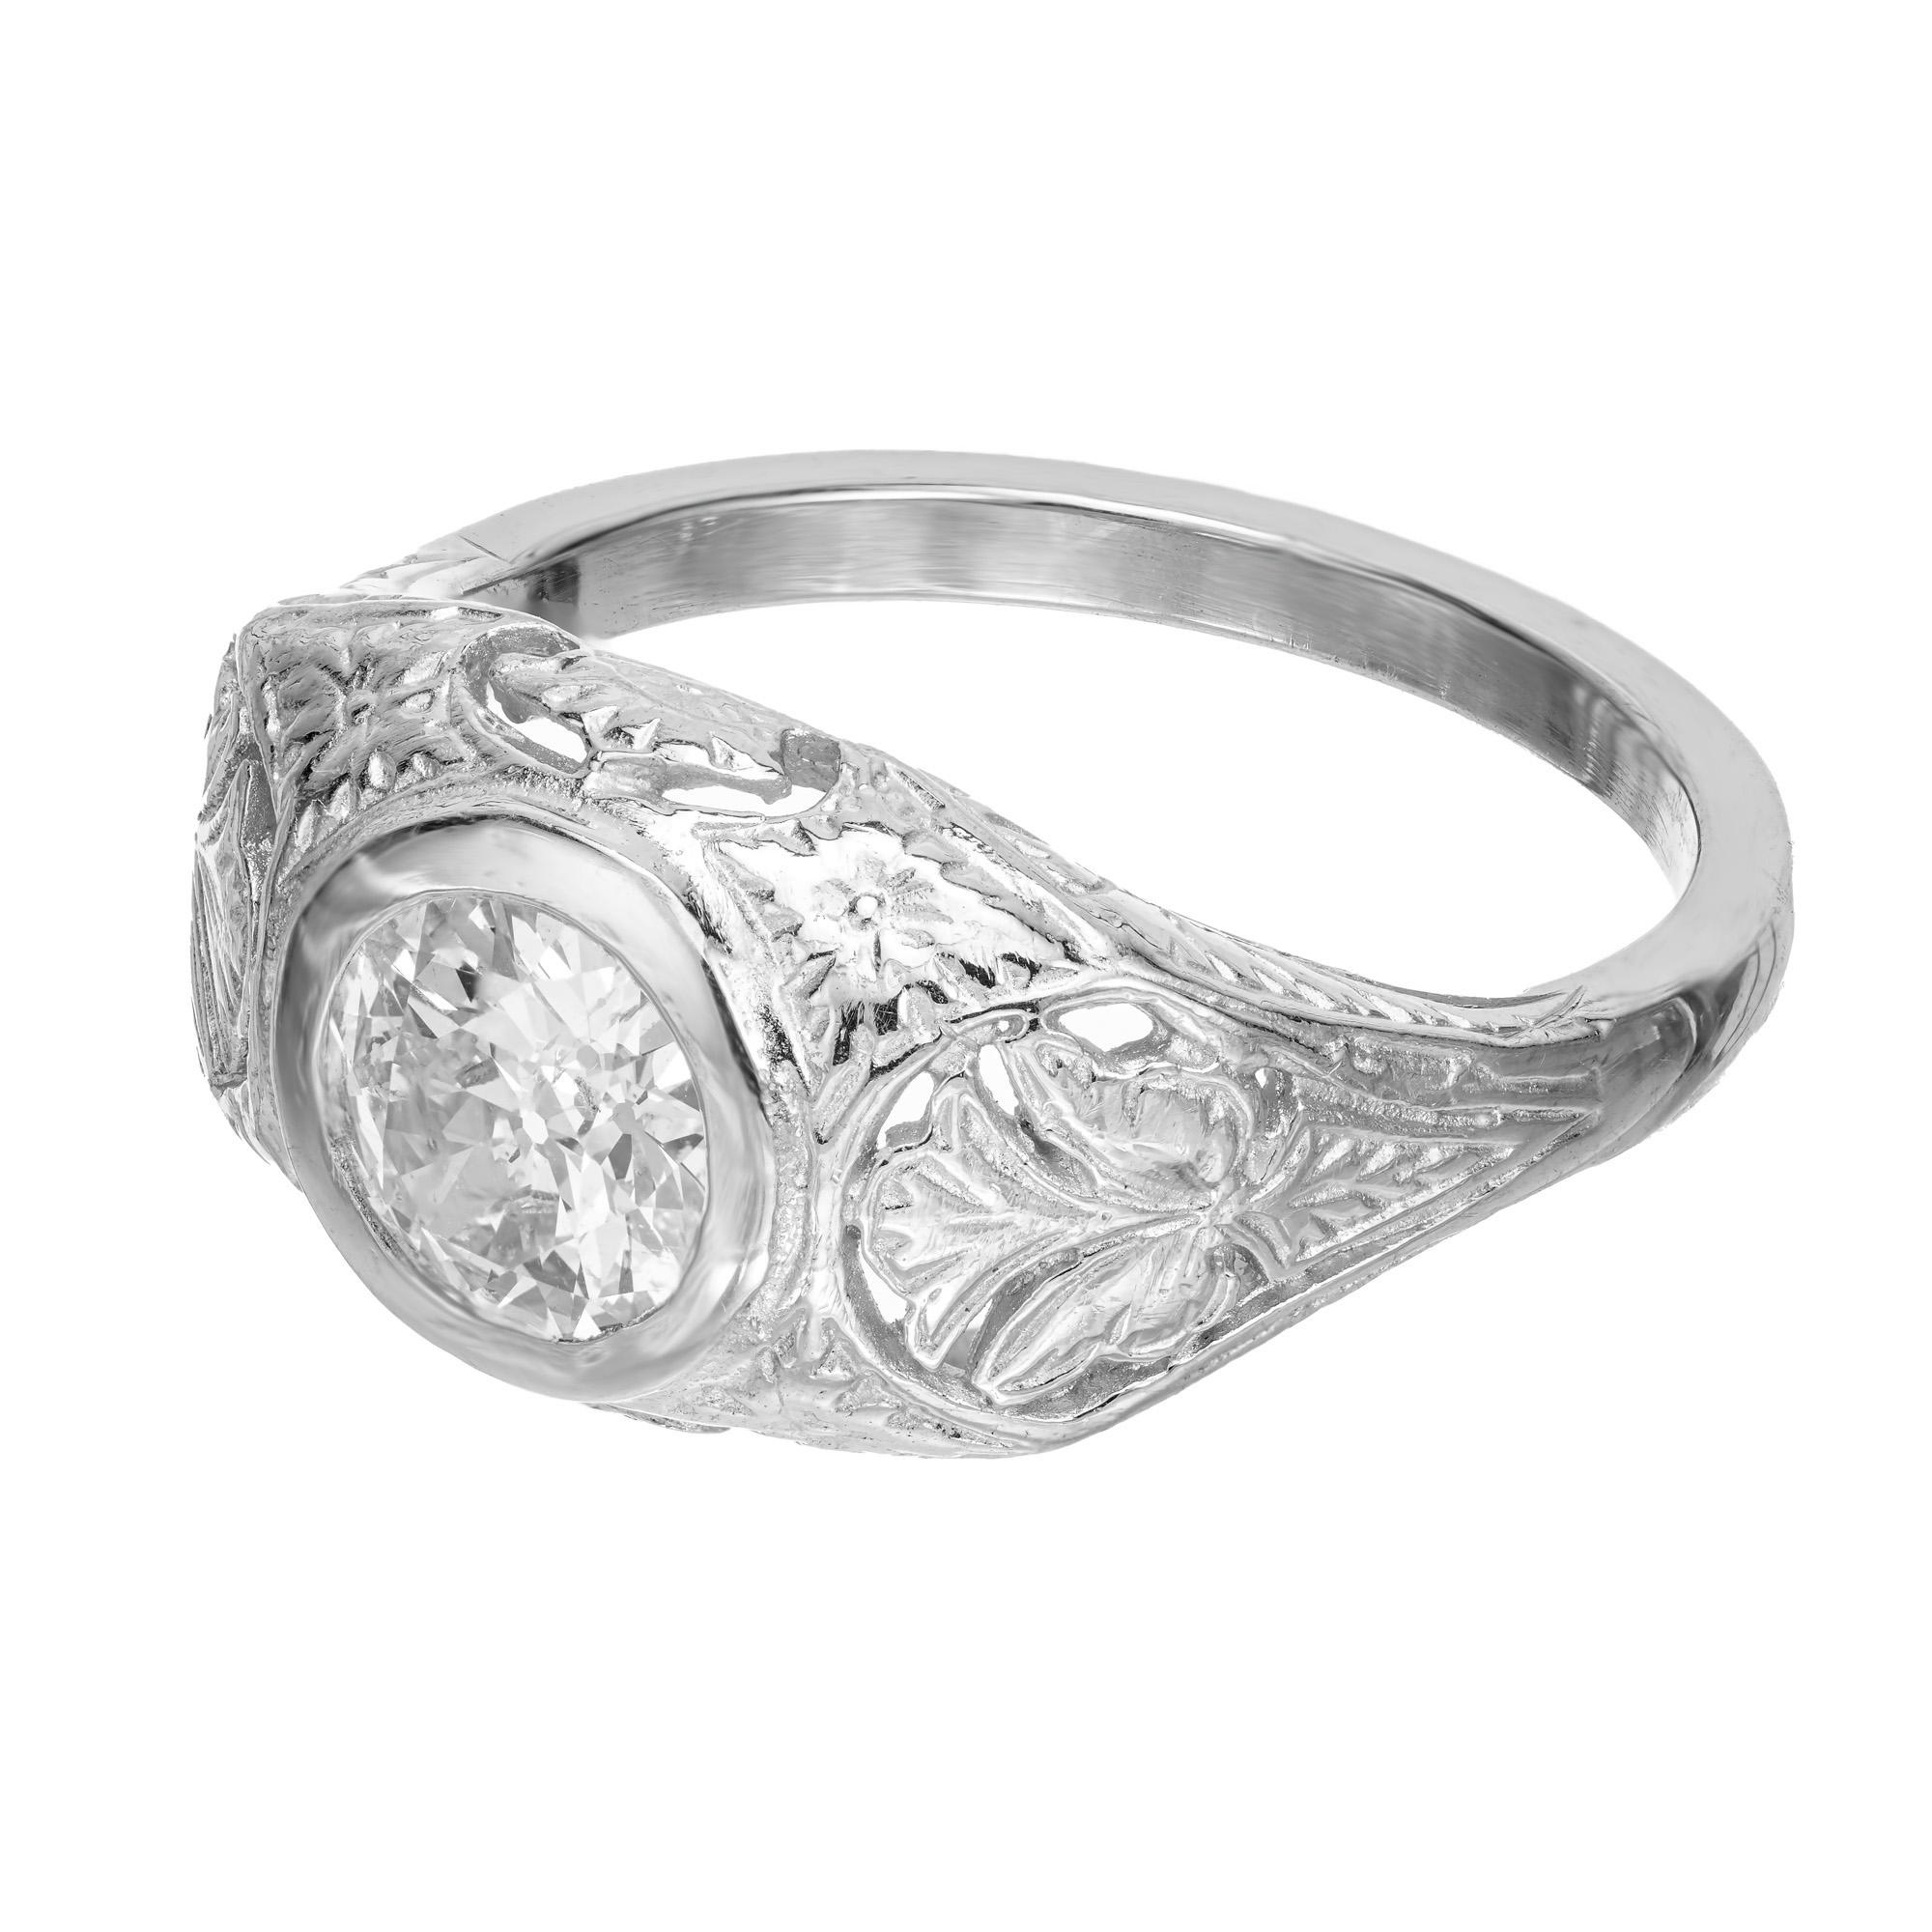 Old European Cut GIA Certified 1.10 Carat Diamond Platinum Art Deco Pierced Engraved Ring